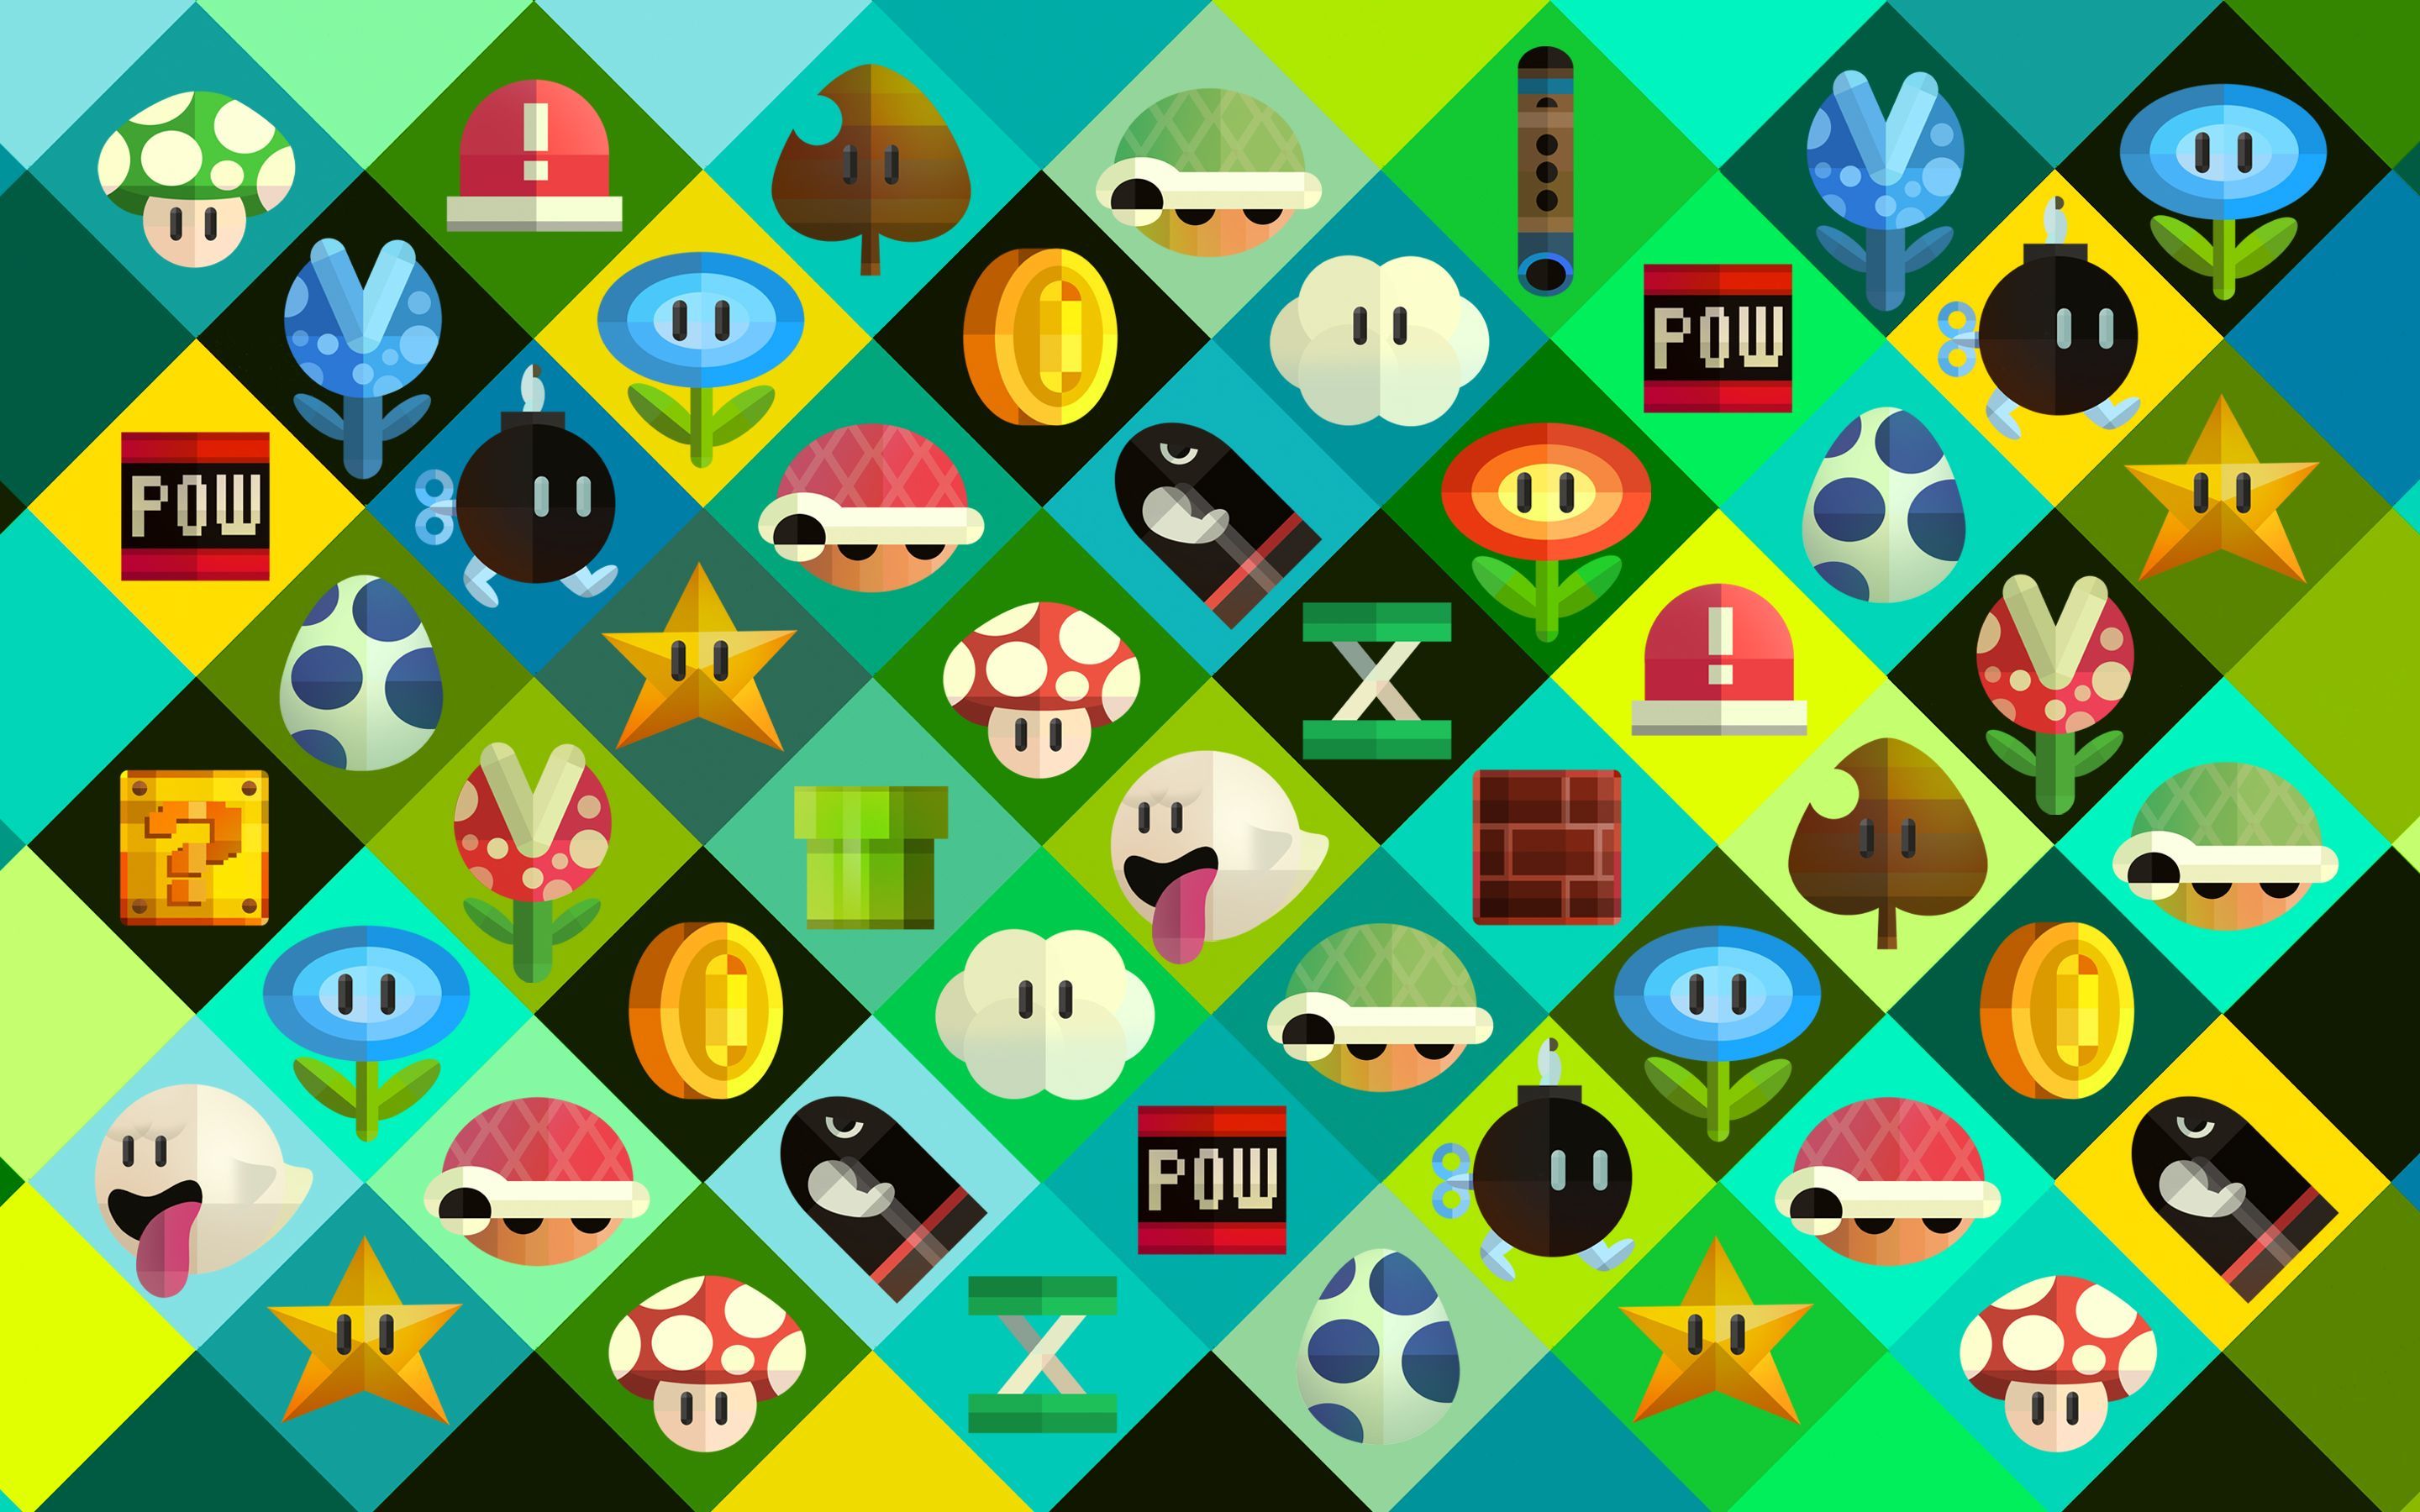 Nintendo Screen Savers Wallpapers